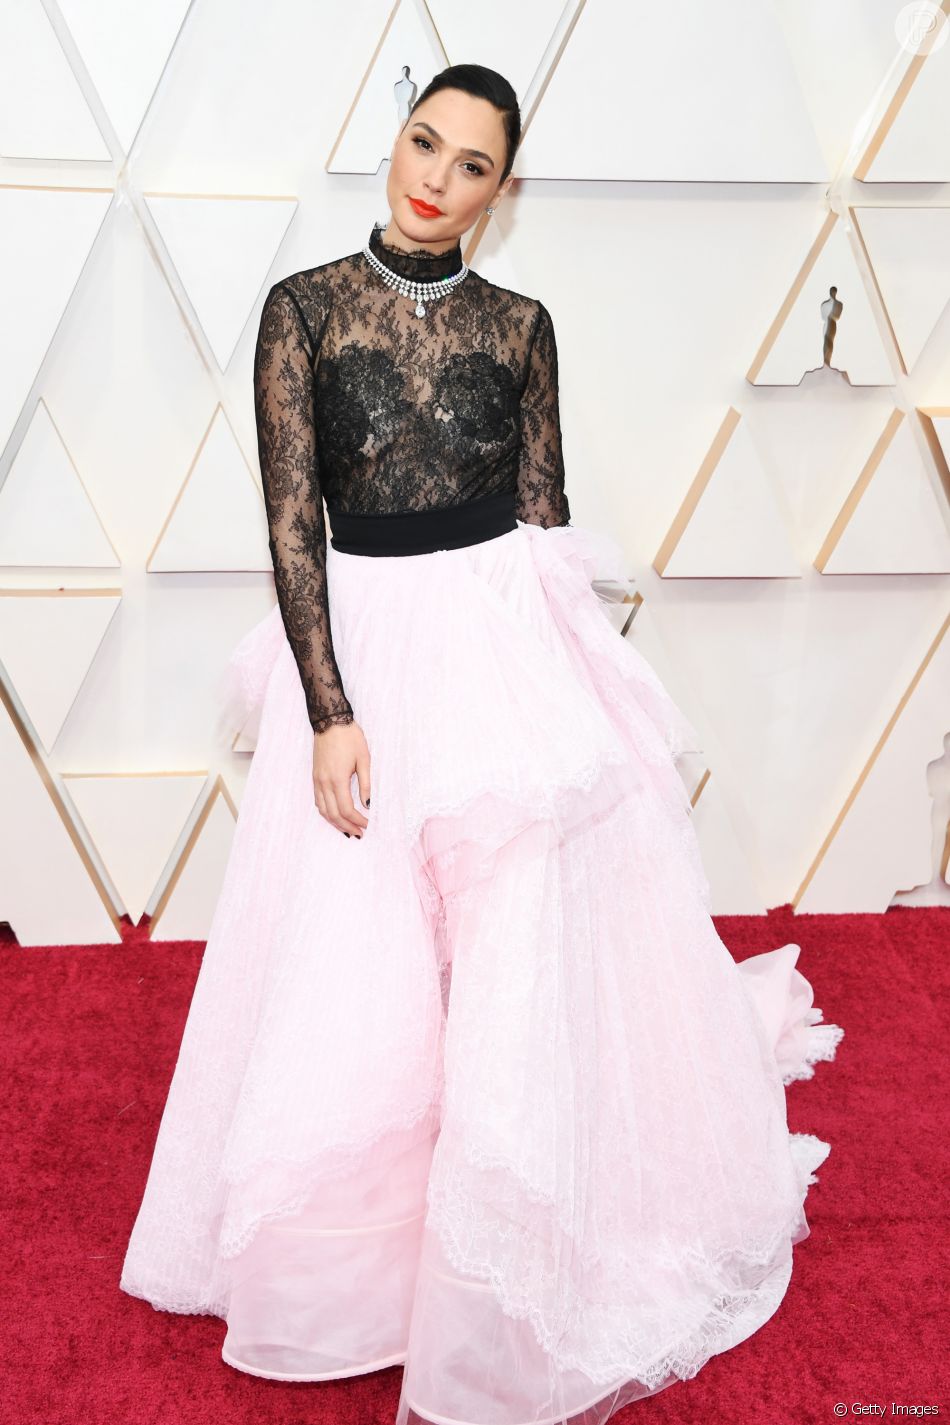 Gal Gadot misturou renda, transparência e saia volumosa num look Givenchy para ir ao Oscar 2020